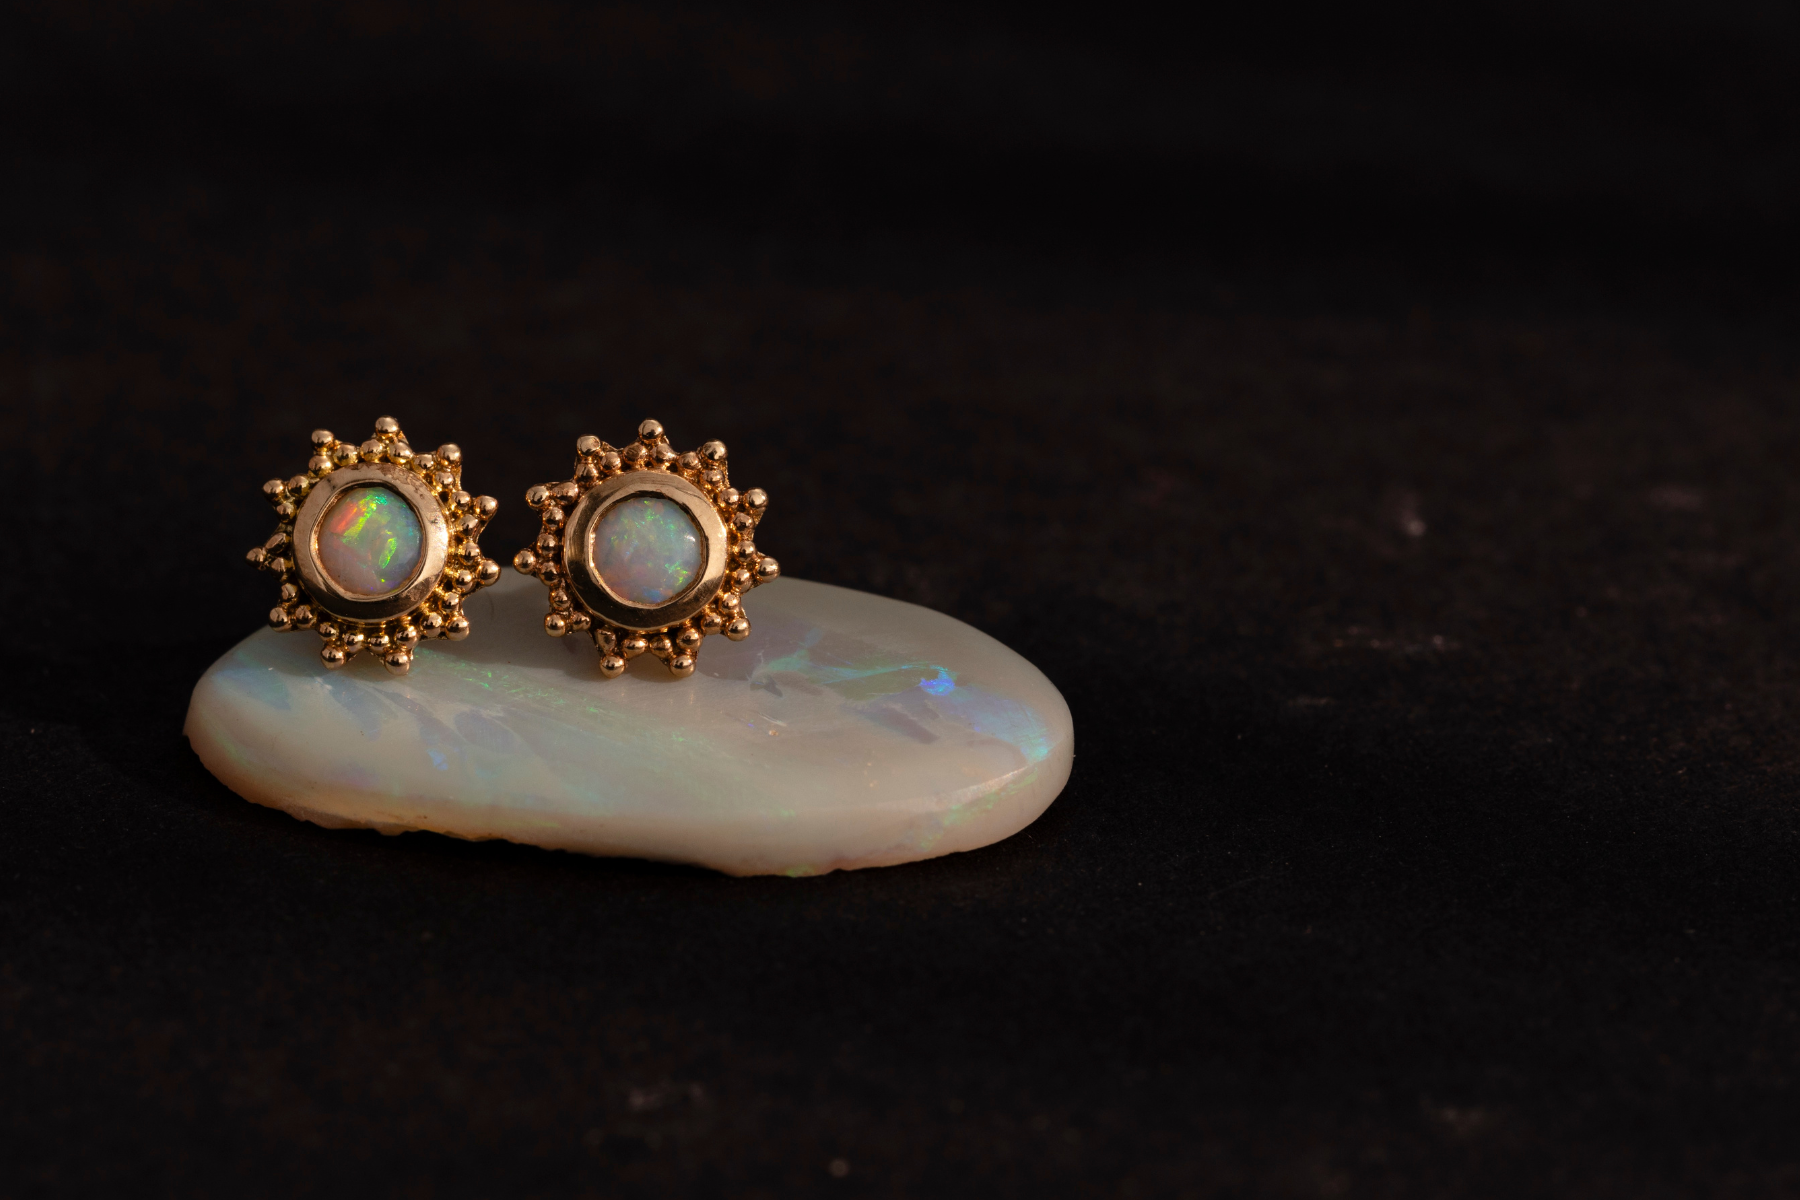 Gemstone insight: Opal - The Eye Stone